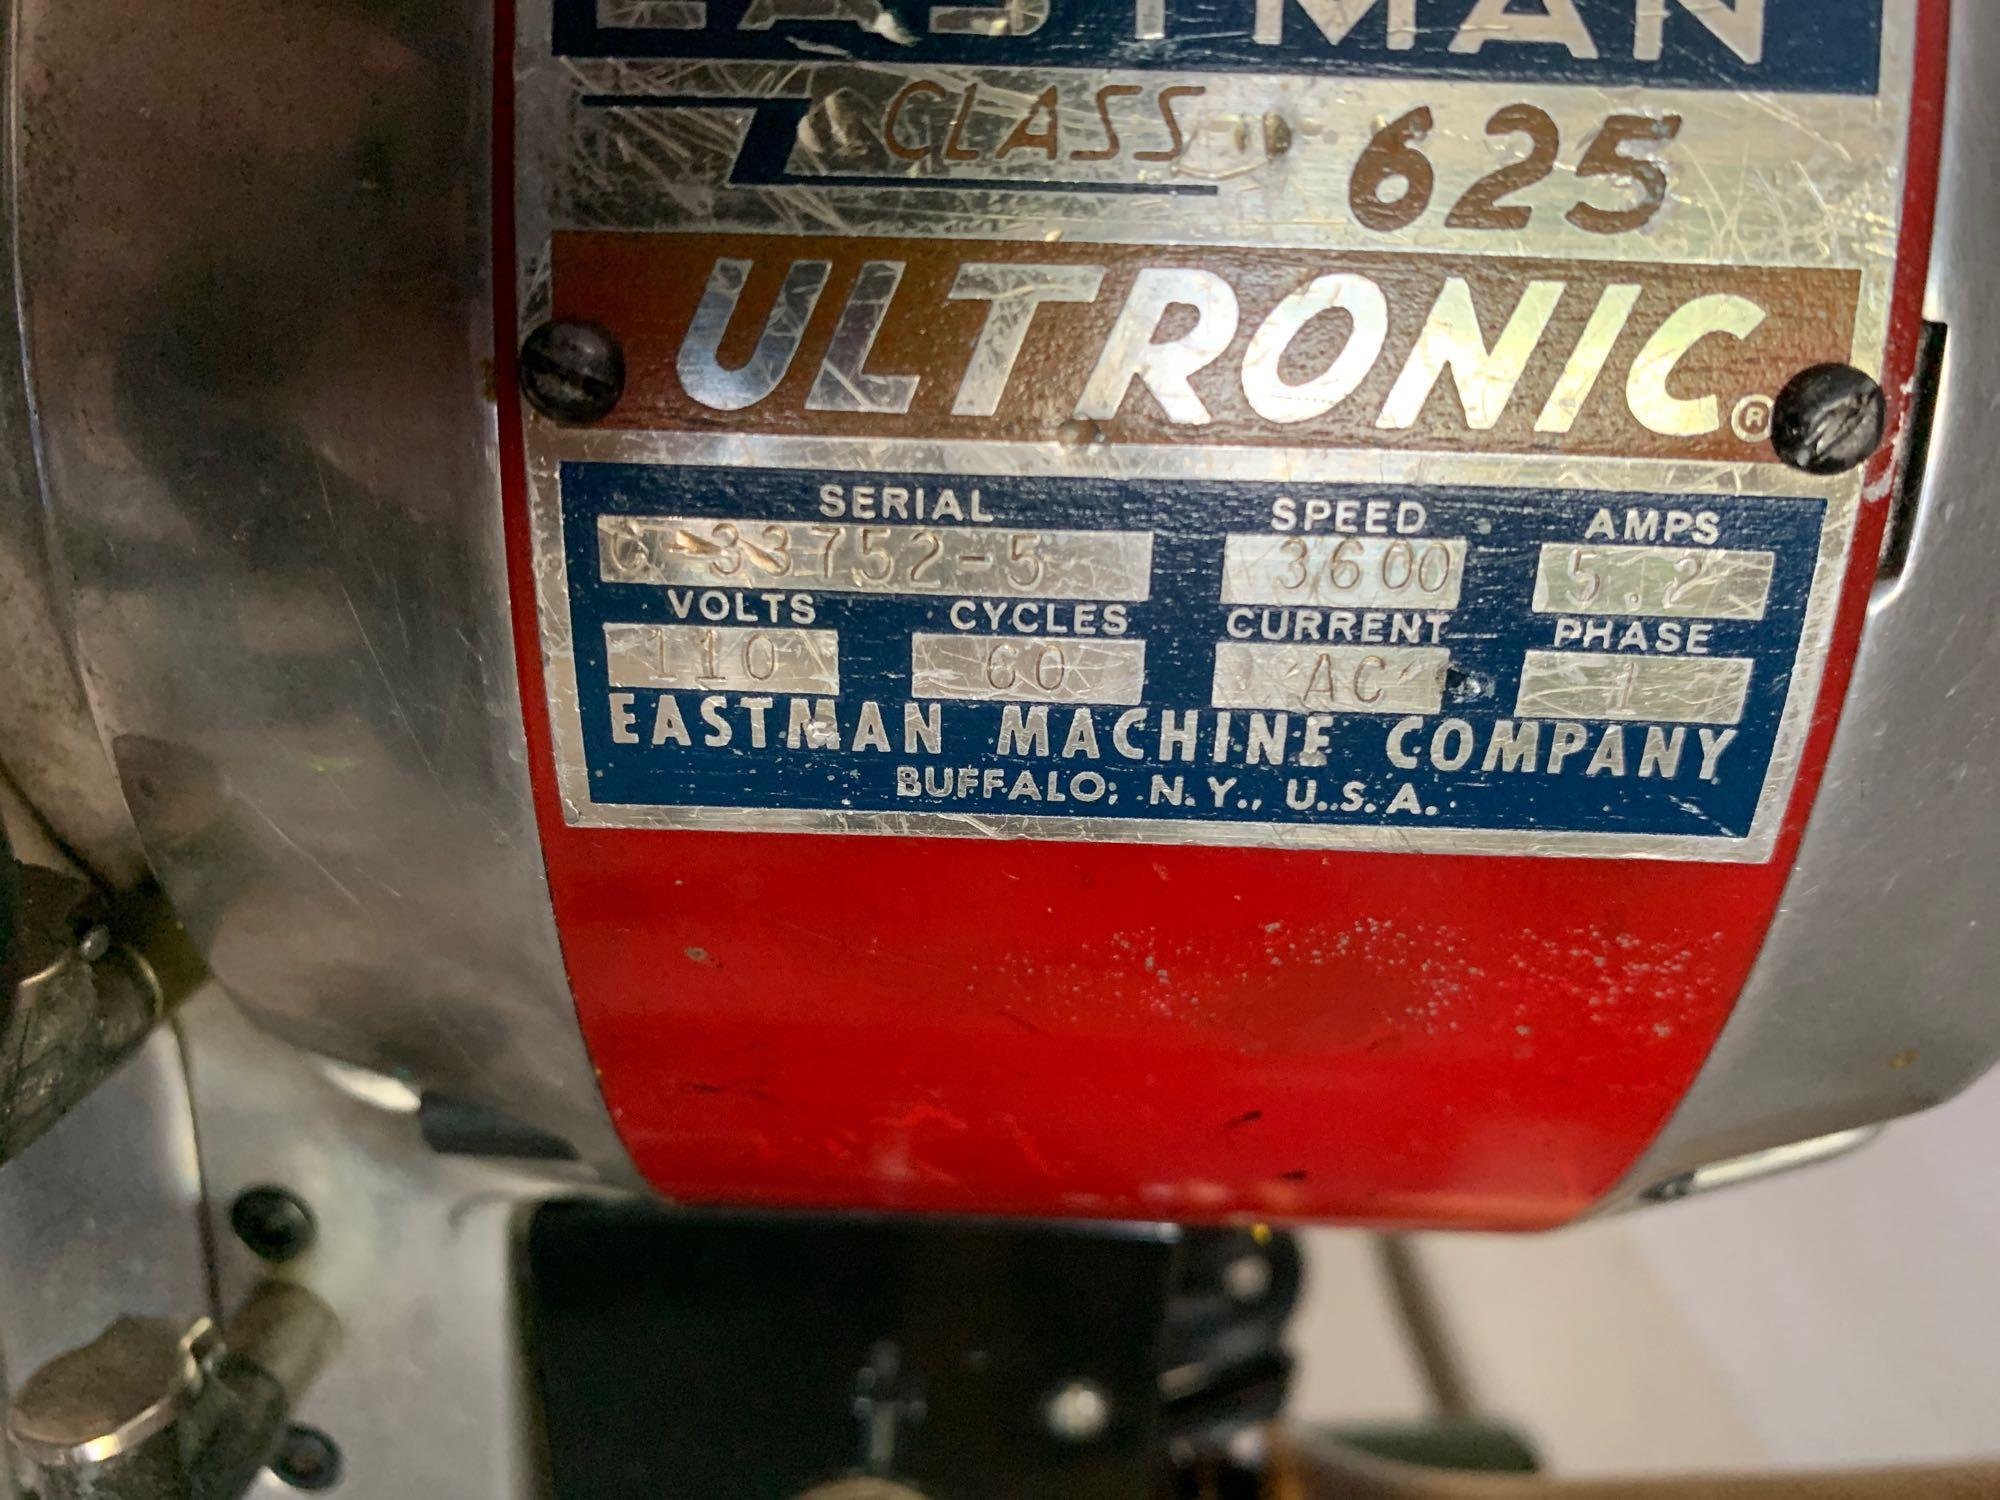 Eastman Ultronic 625 Fabric Cutter with Juke Sewing Machine DNU-241